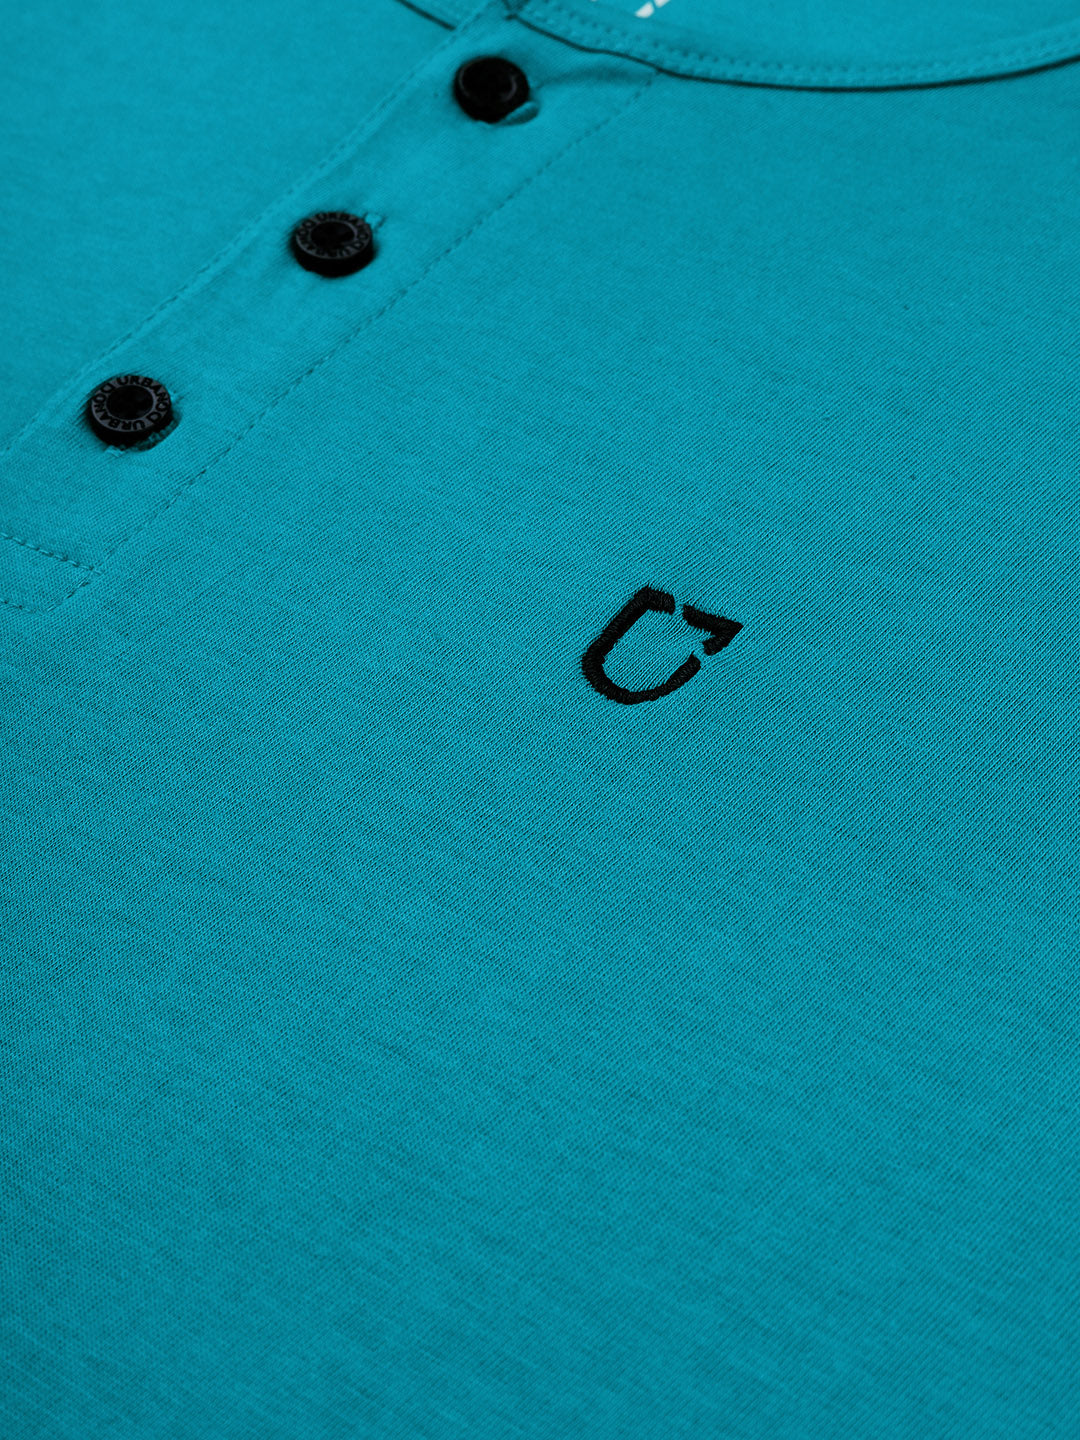 Urbano Fashion Men's Aqua Blue Solid Henley Neck Slim Fit Half Sleeve Cotton T-Shirt